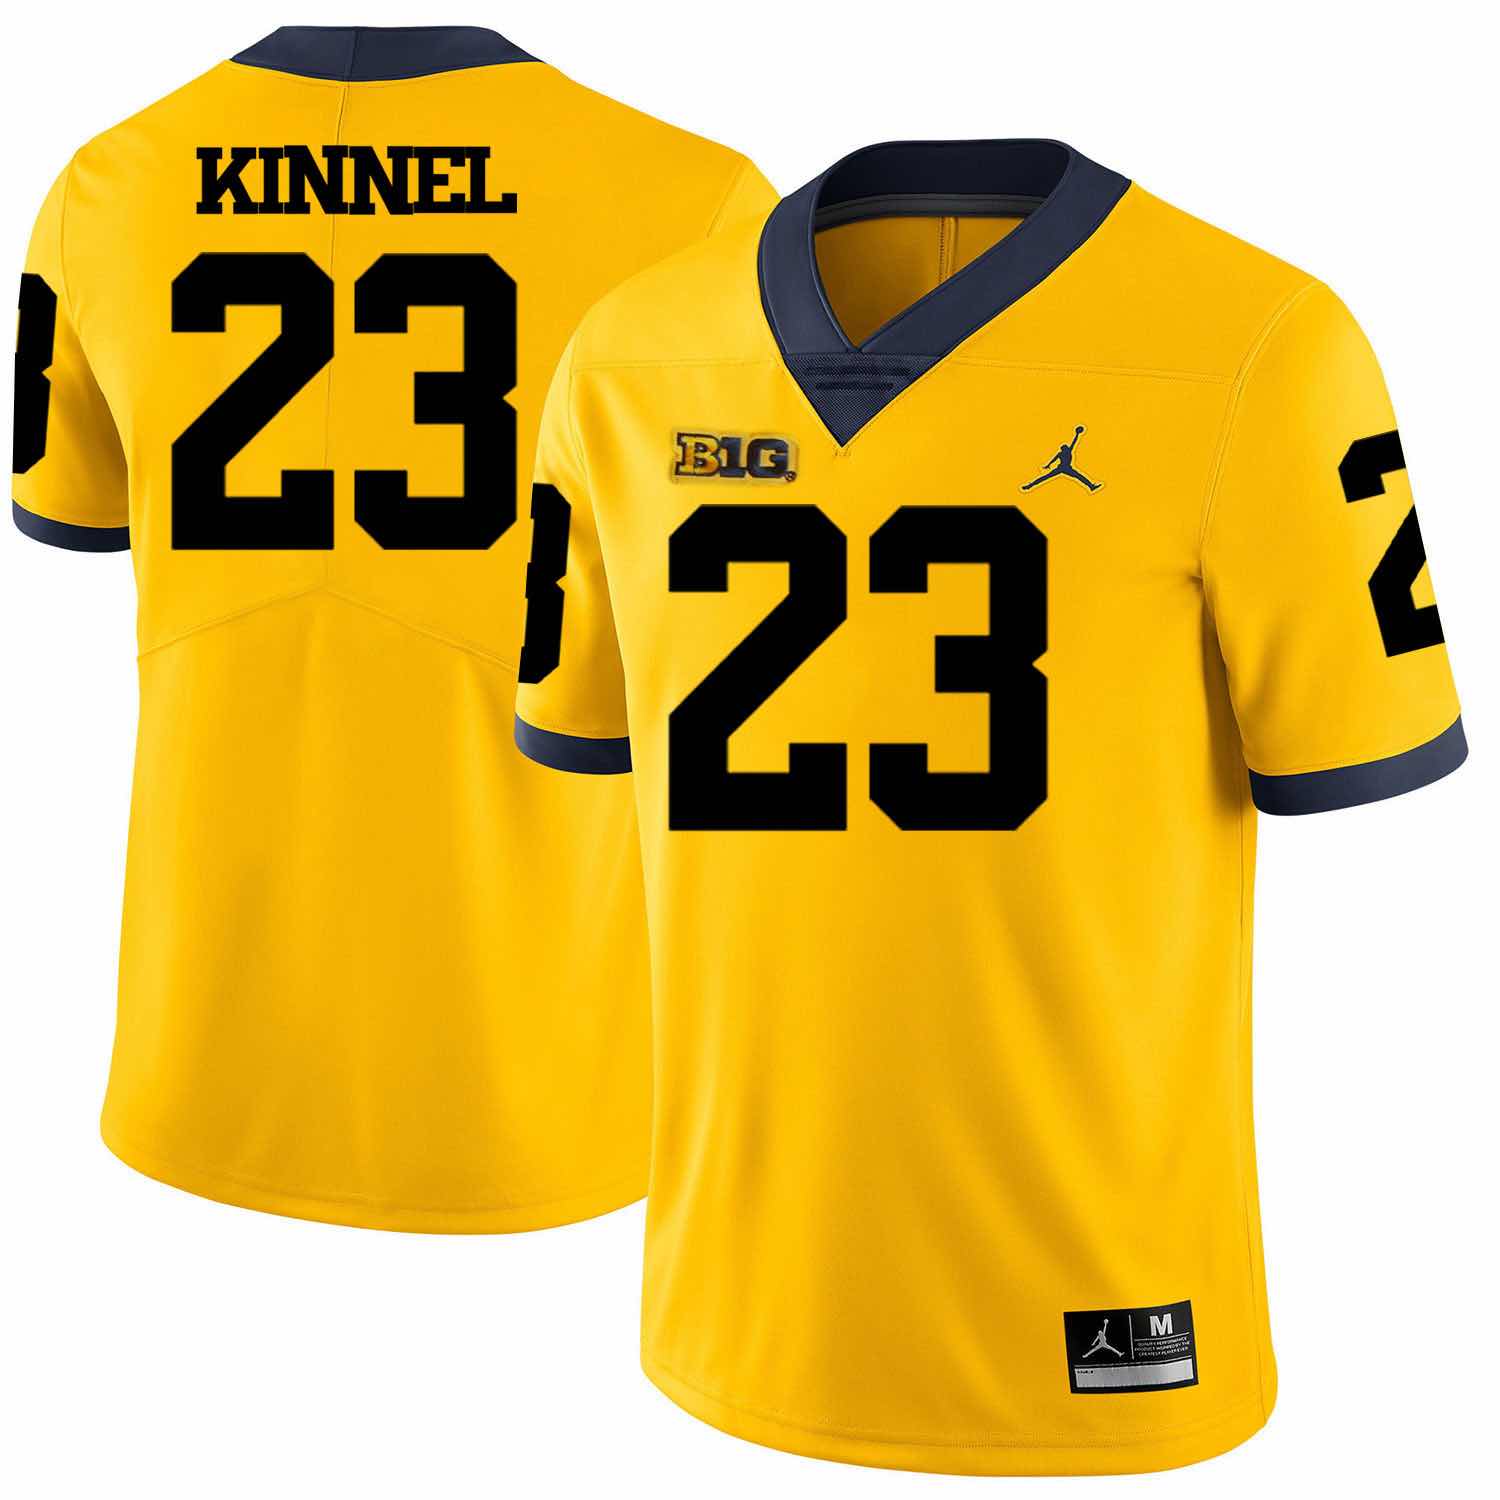 NCAA Michigan Wolverines #23 Kinnel Yellow Football Jersey